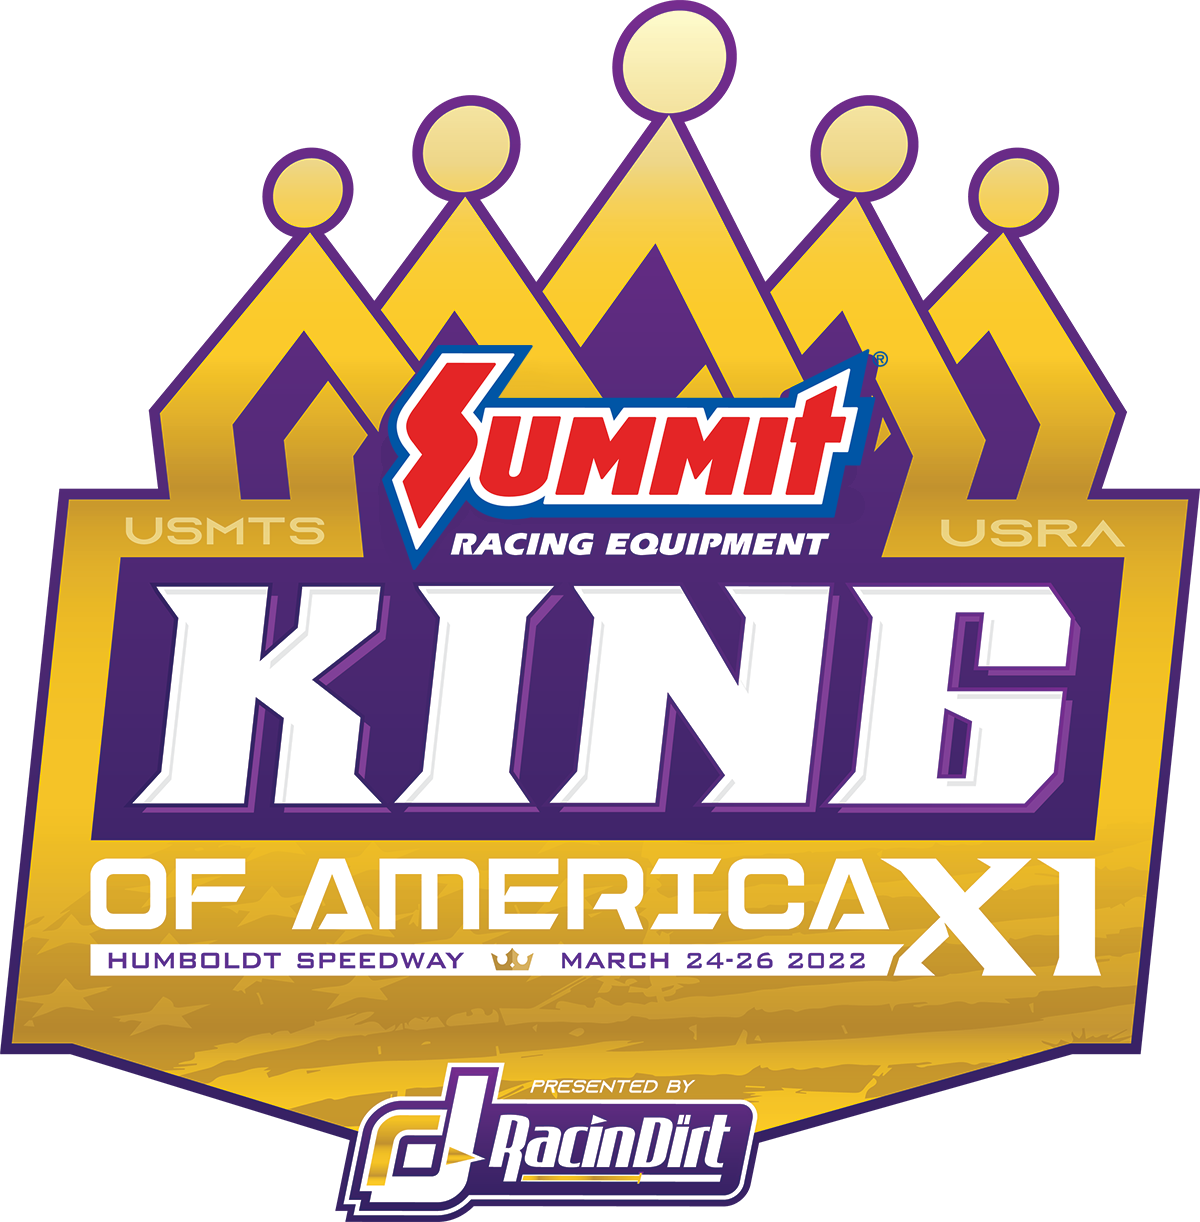 Summit King of America XI presented by RacinDirt